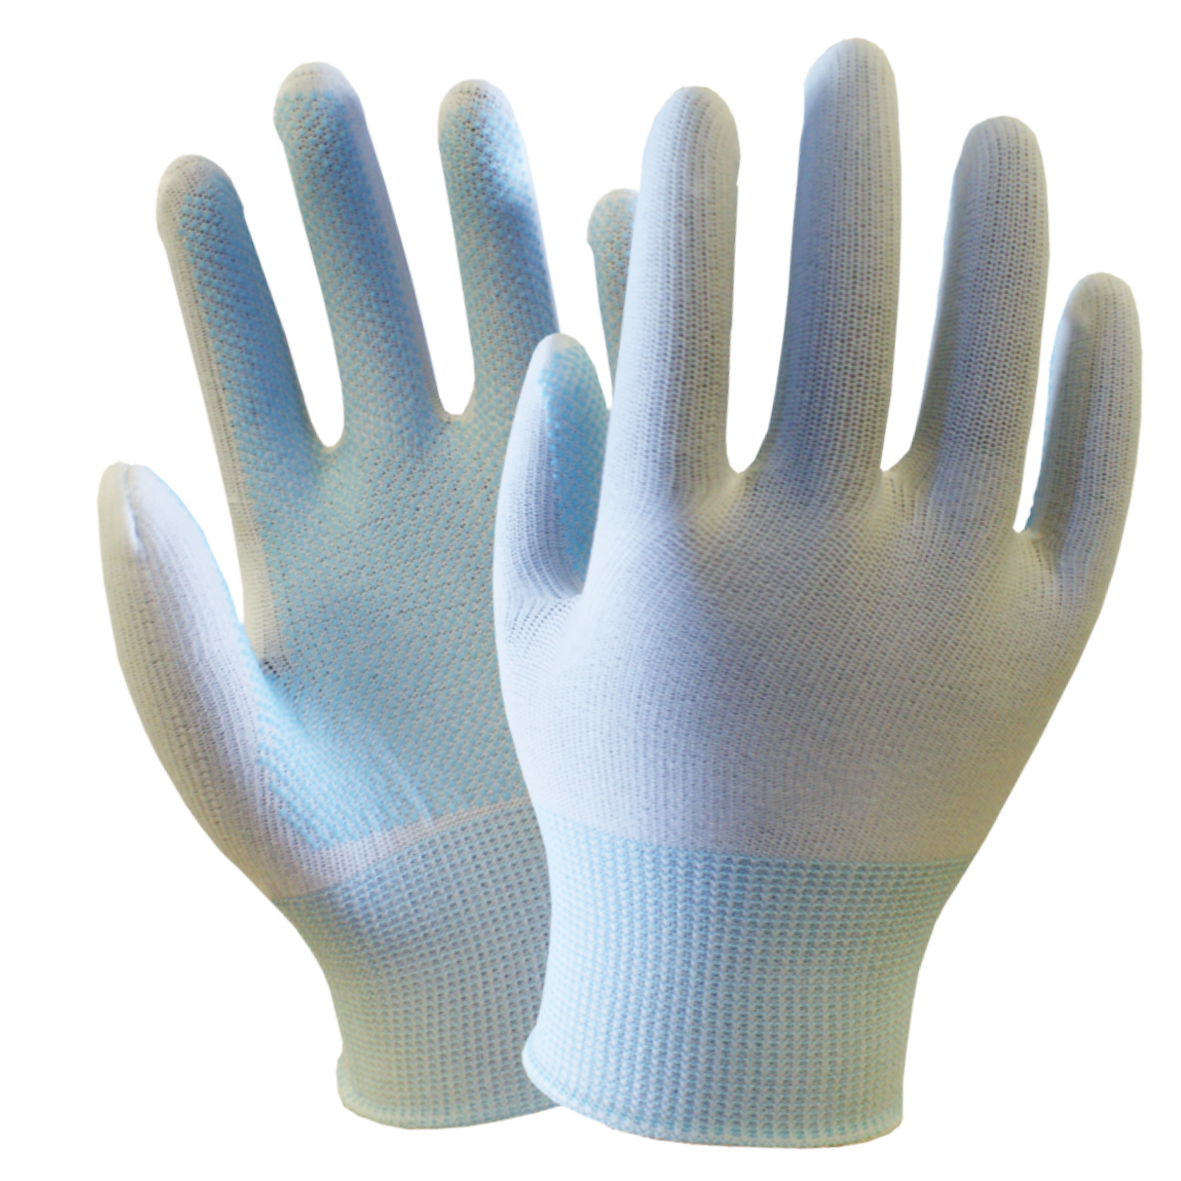 Driver gloves